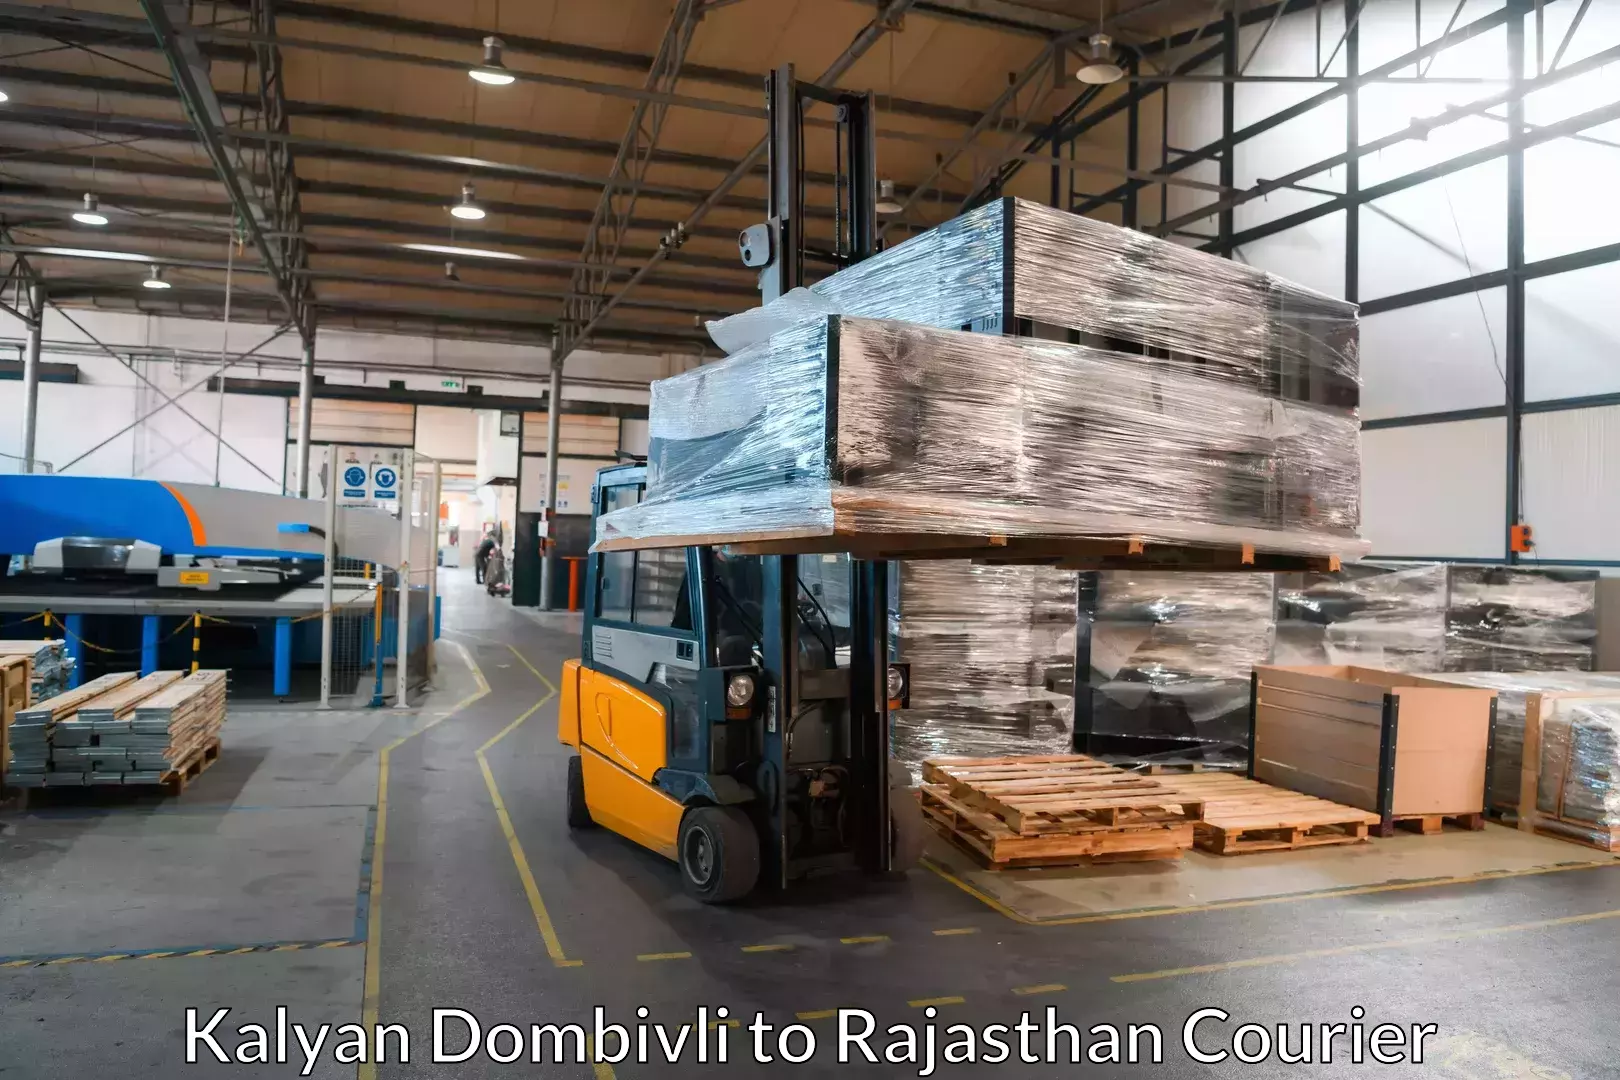 Furniture delivery service Kalyan Dombivli to Bhiwadi